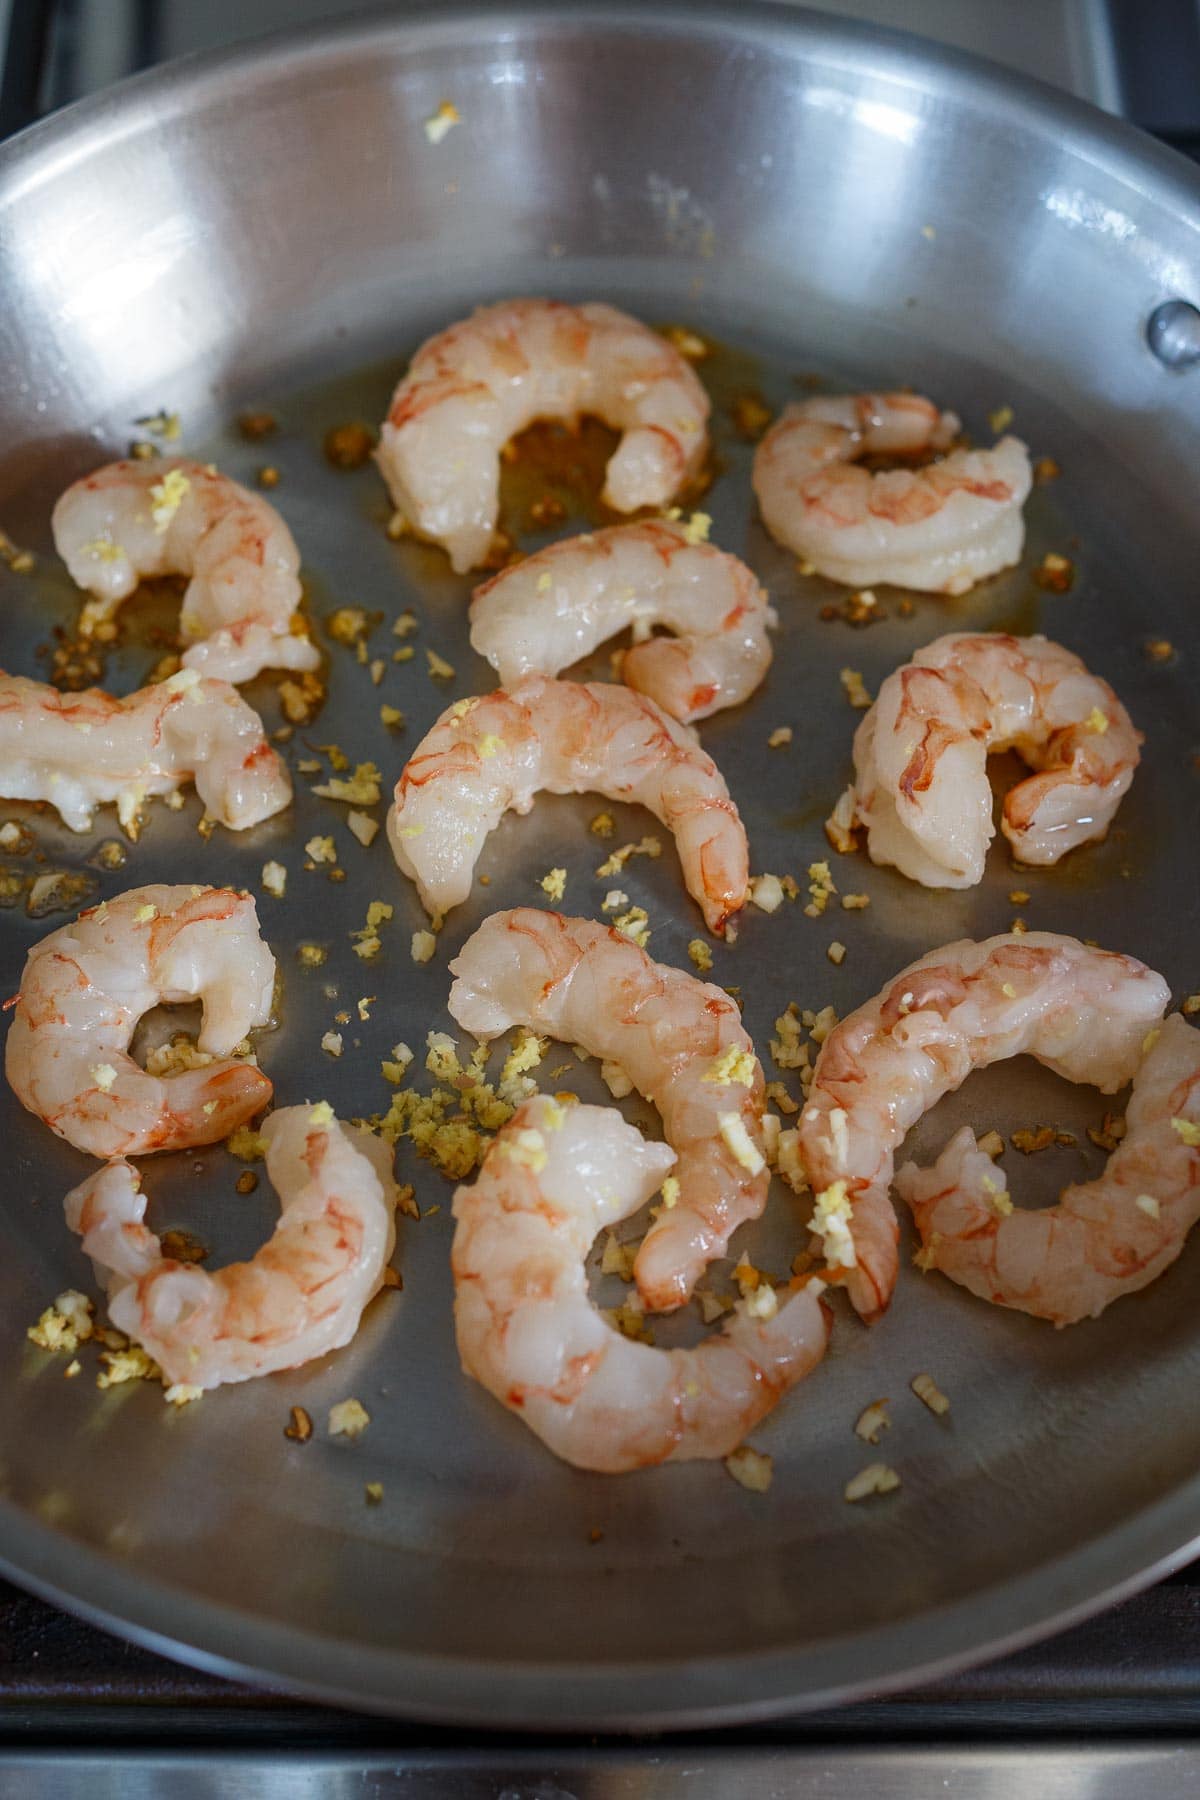 Shrimp in sauté pan with ginger and garlic.